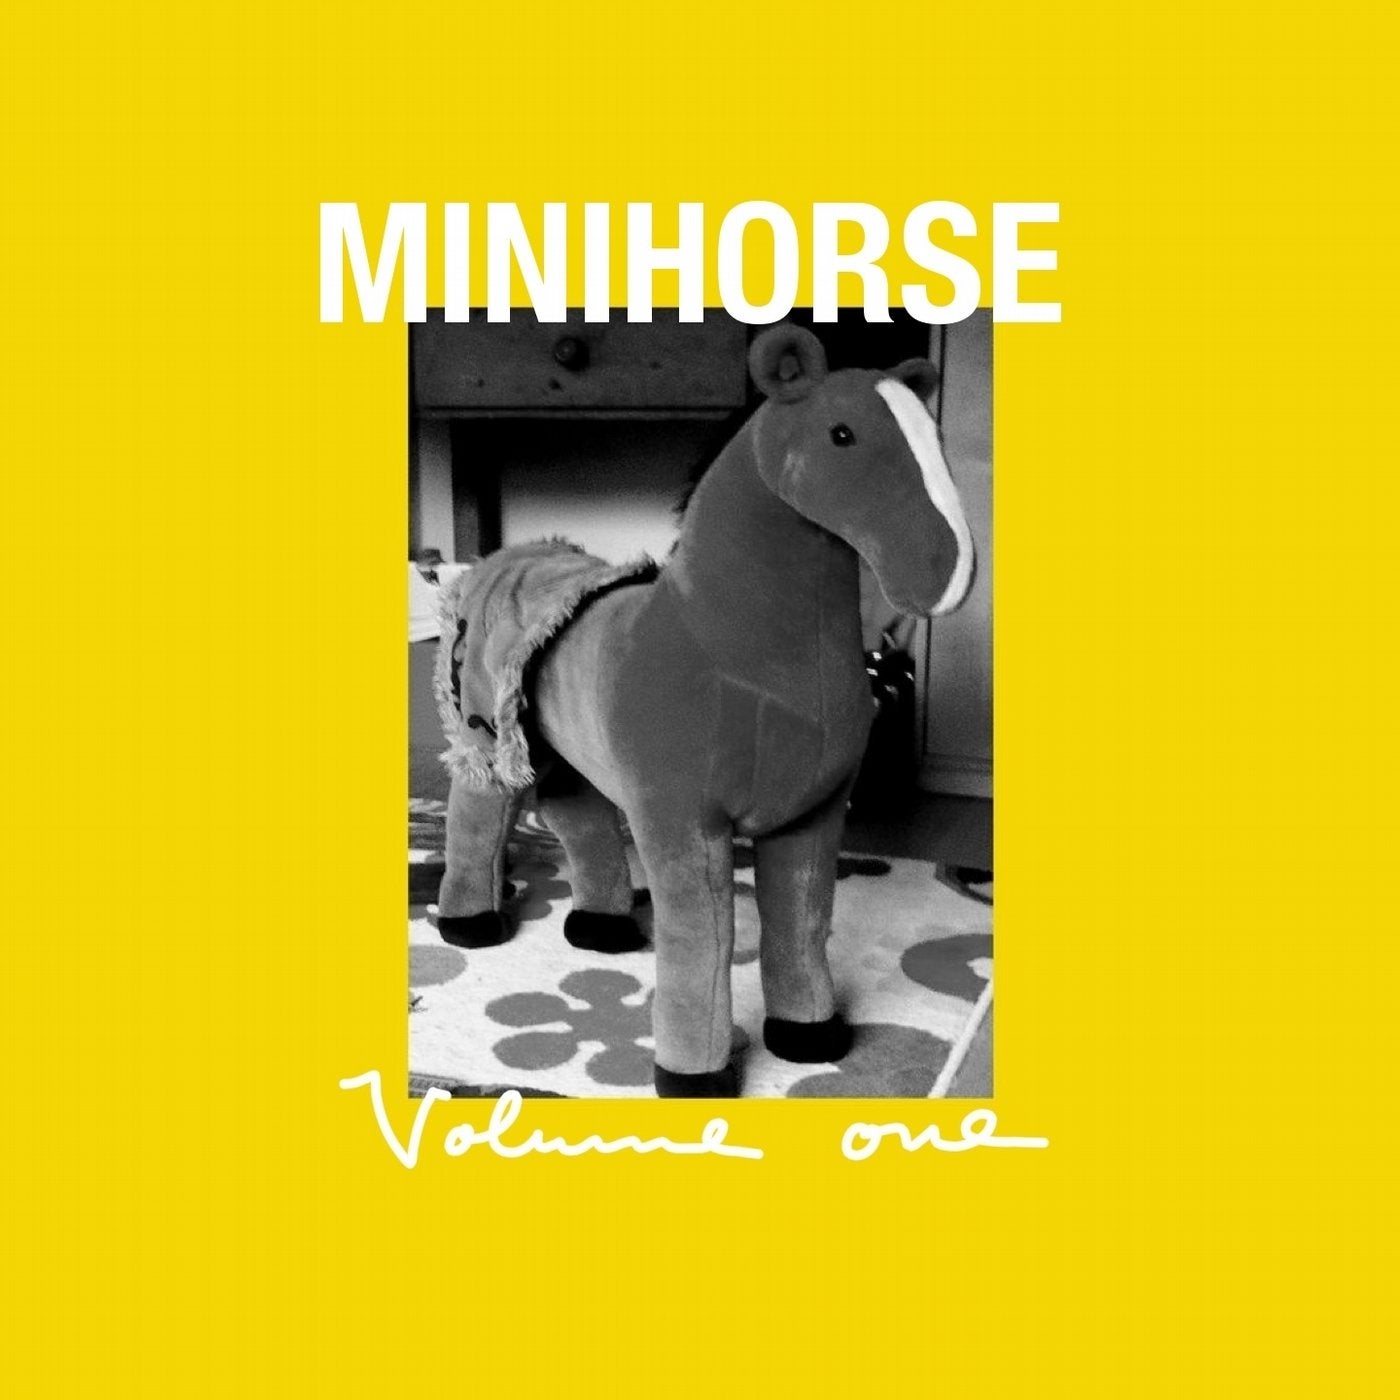 Minihorse Volume One